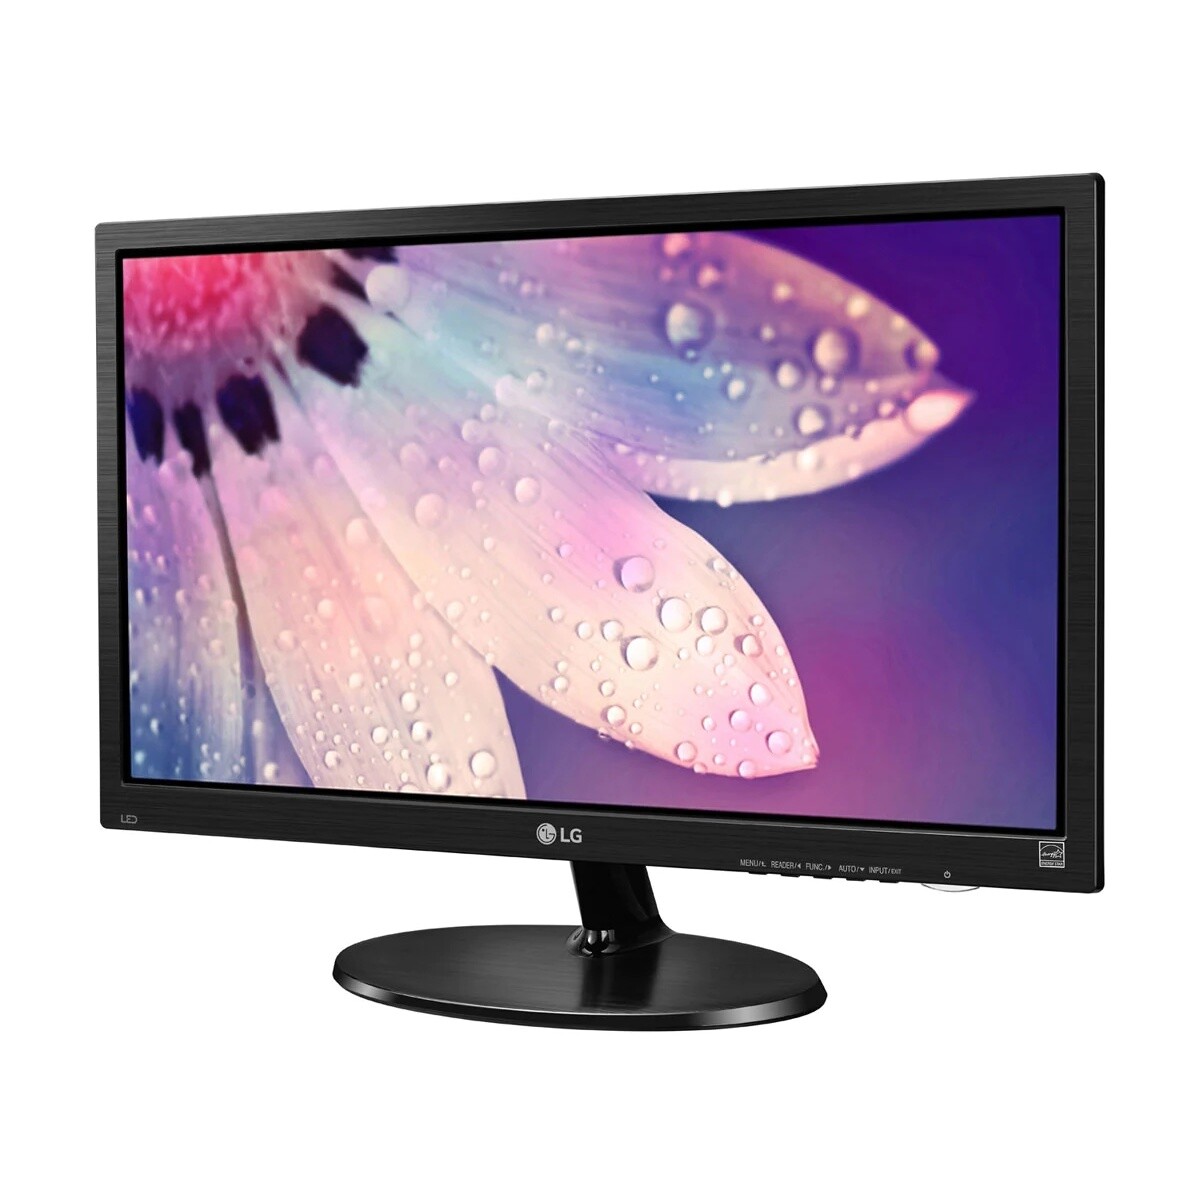 Monitor LG de 19" Pulgadas LCD TFT con HDMI 19M38H-B Negra